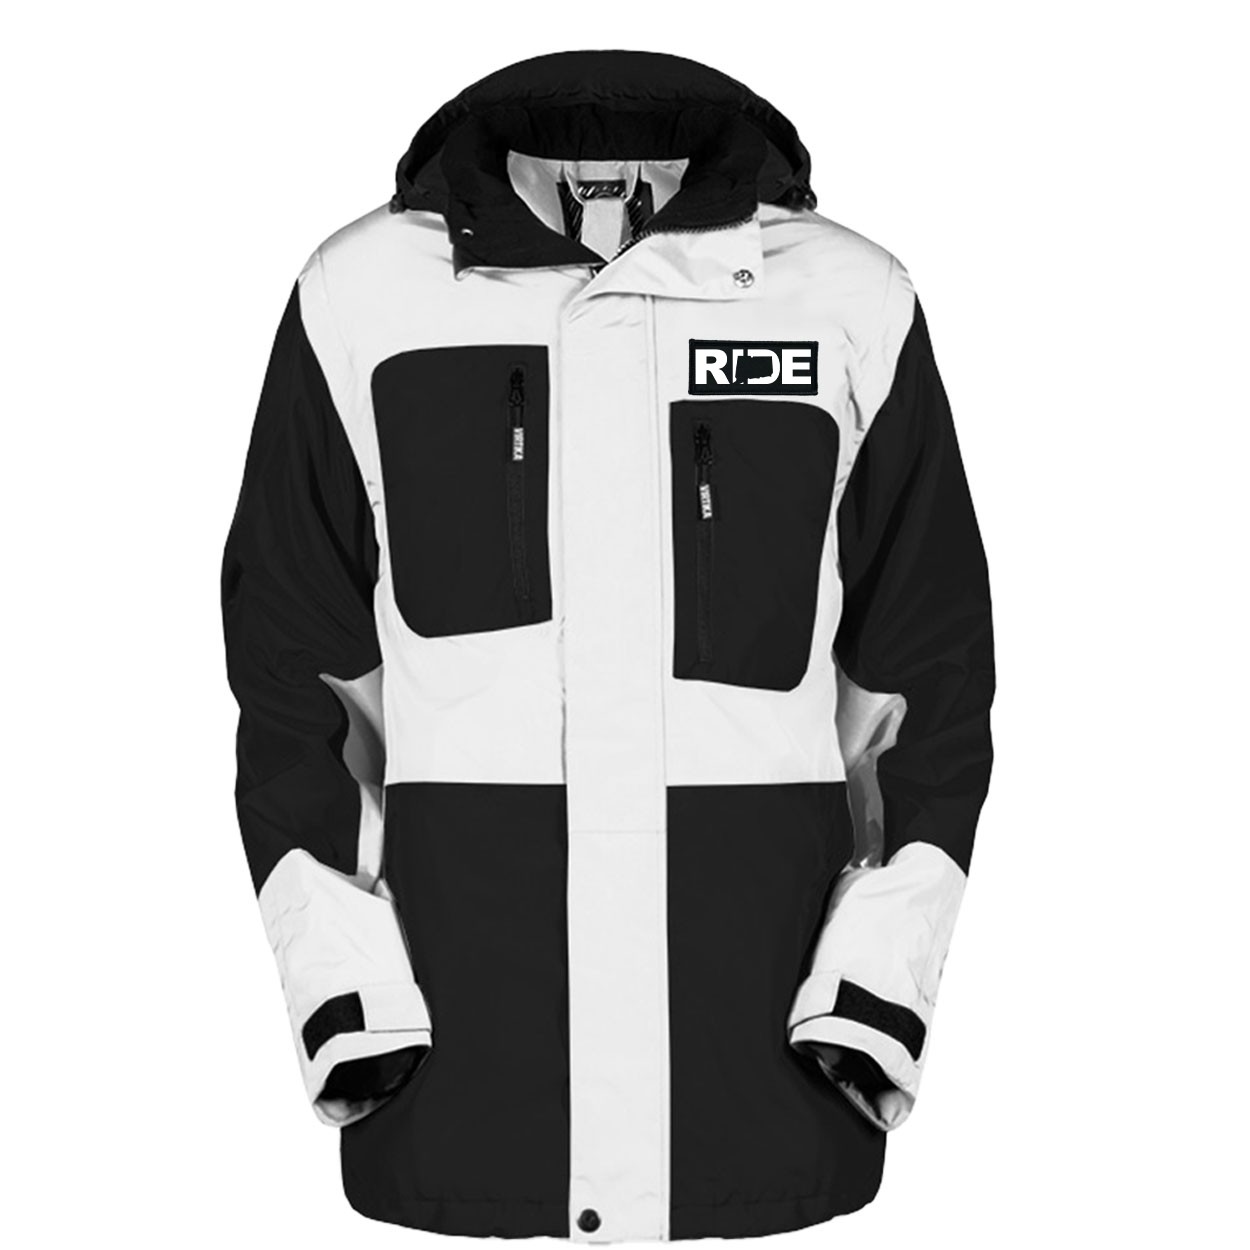 Ride Connecticut Pro Waterproof Breathable Winter Virtika Jacket Black/White (White Logo)